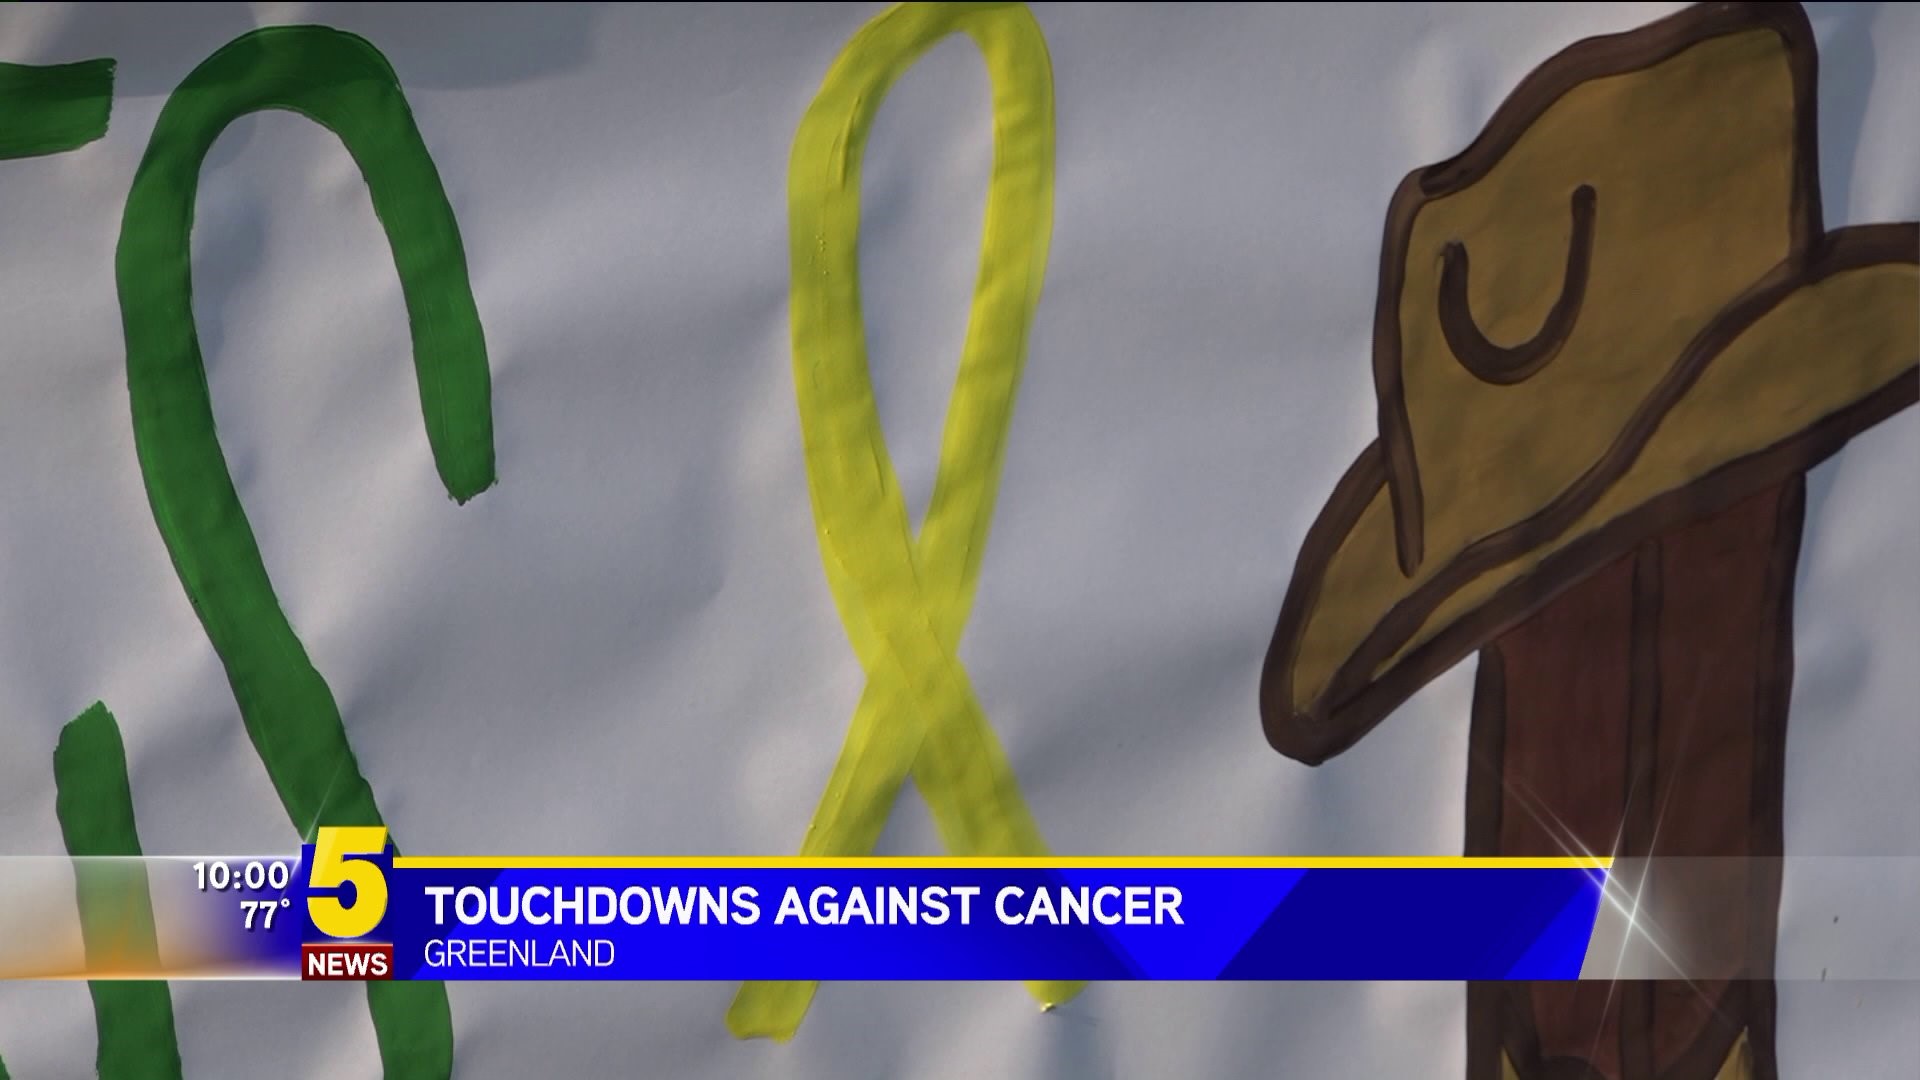 Touchdowns Against Cancer